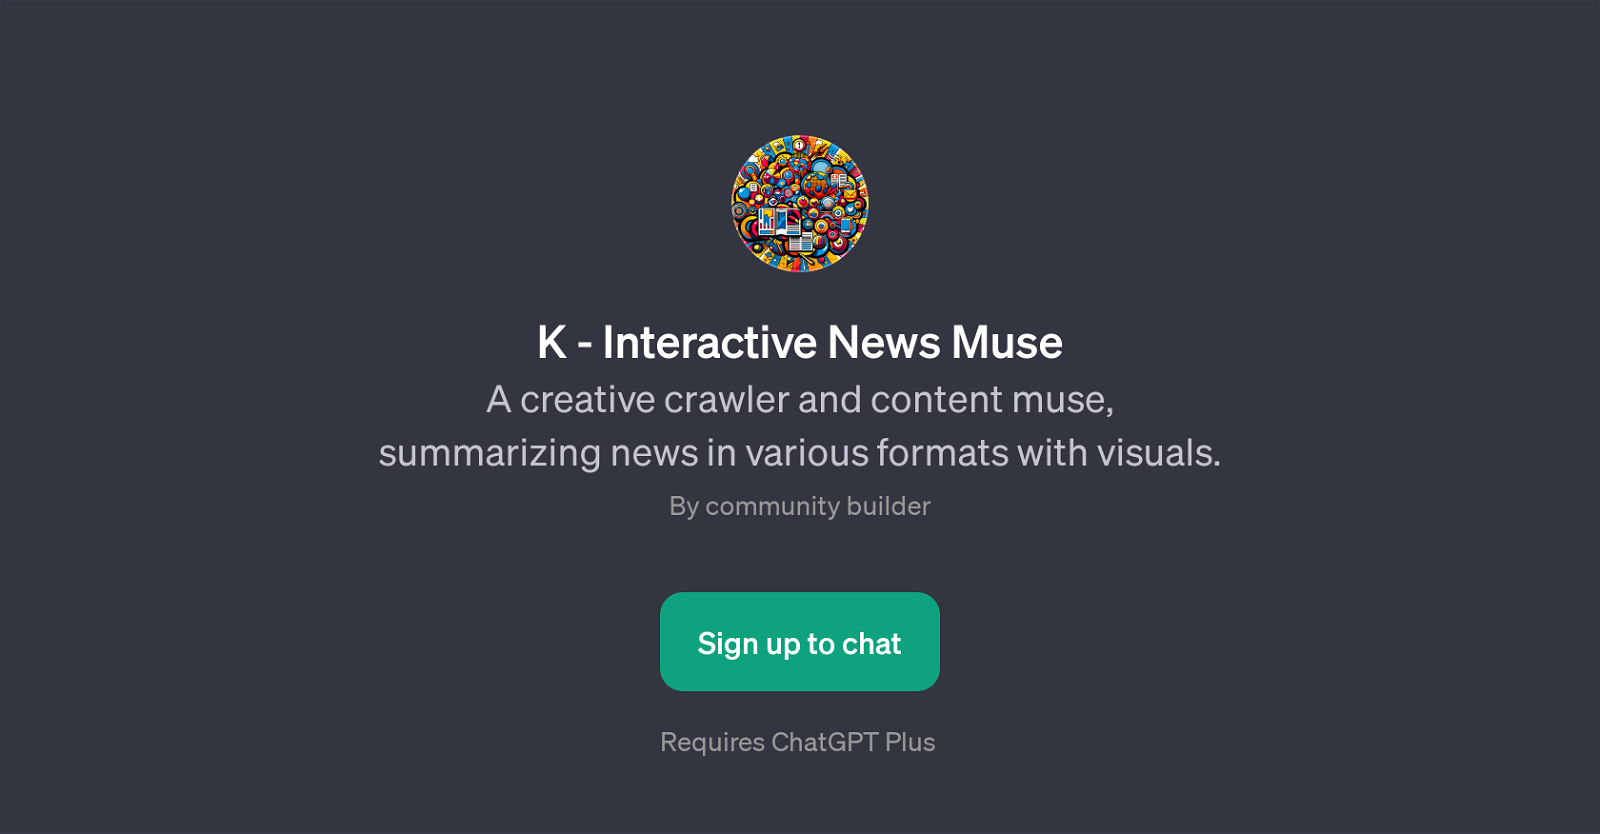 K - Interactive News Muse website